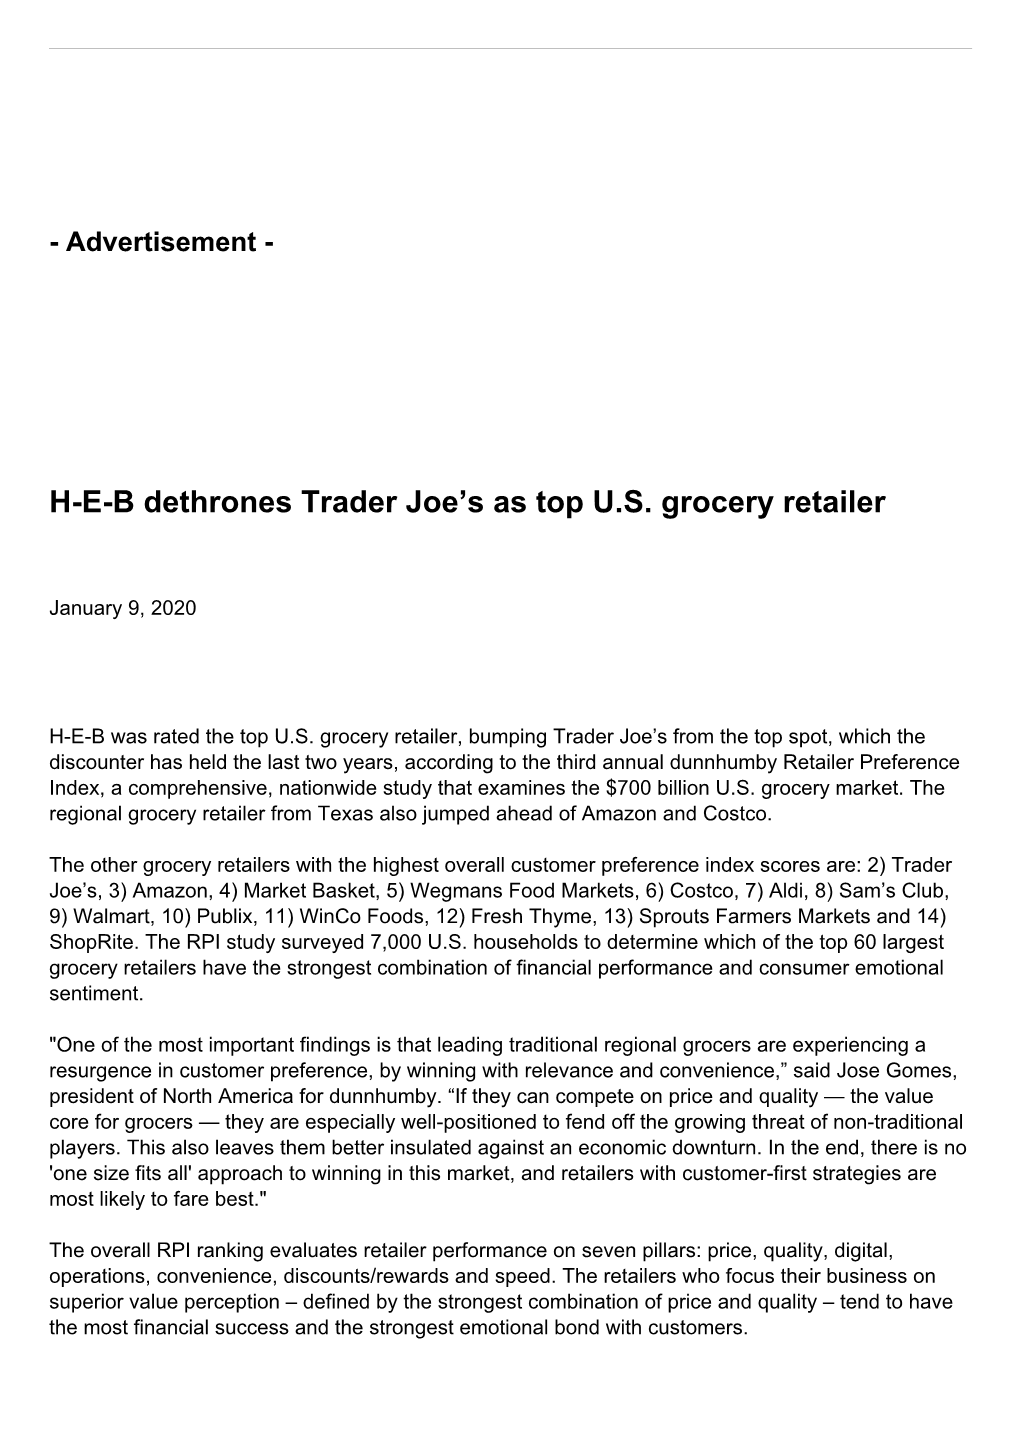 H-E-B Dethrones Trader Joe's As Top U.S. Grocery Retailer